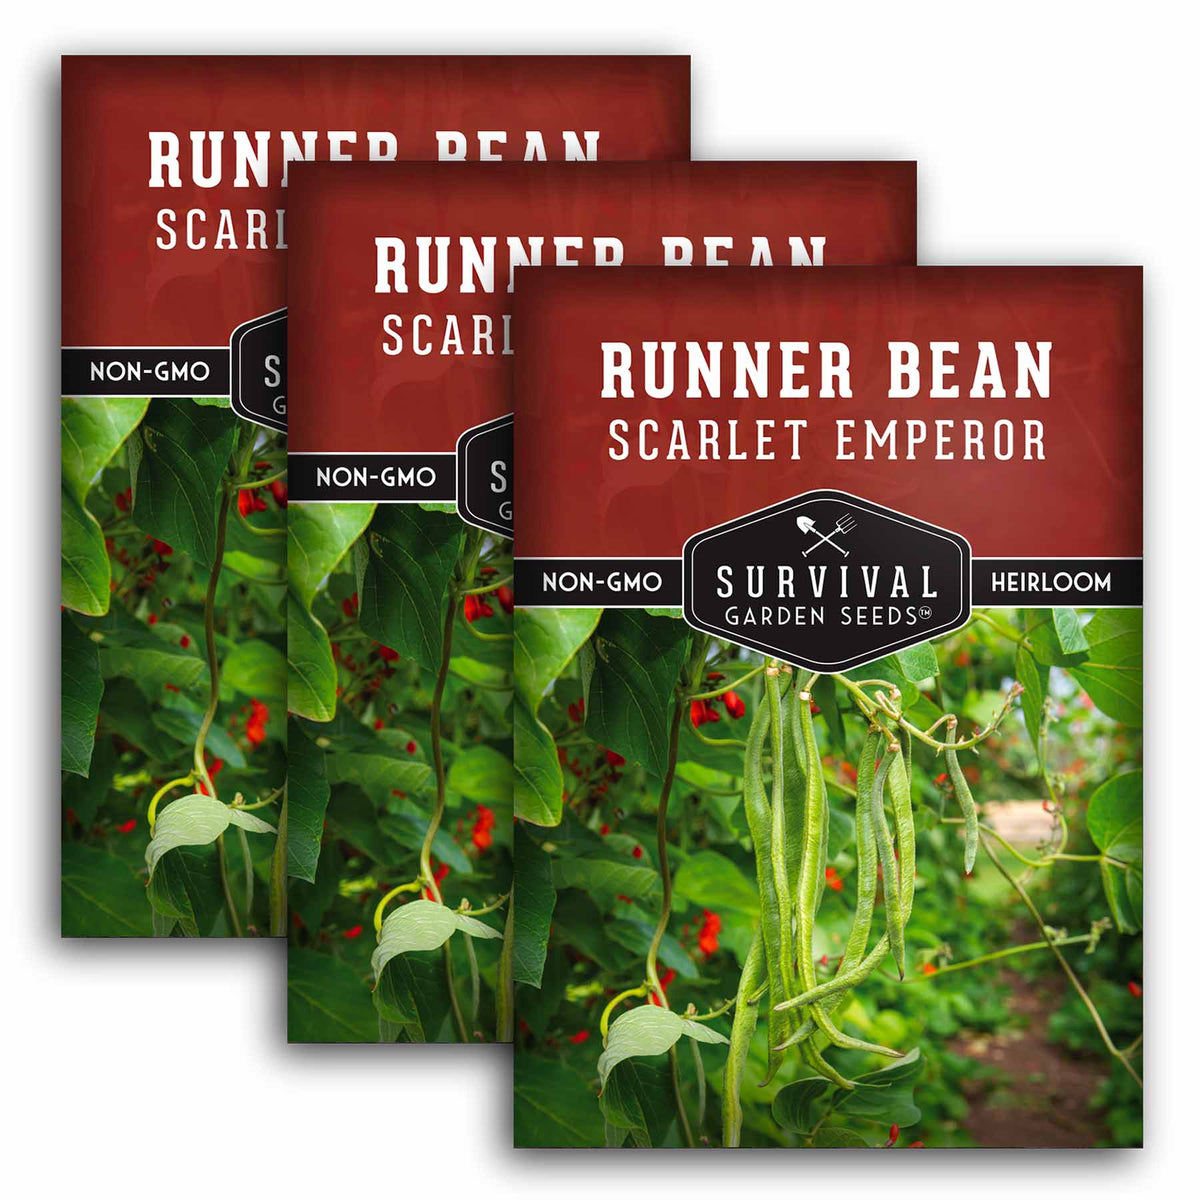 3 packets of Scarlet Emperor Runner Bean seeds